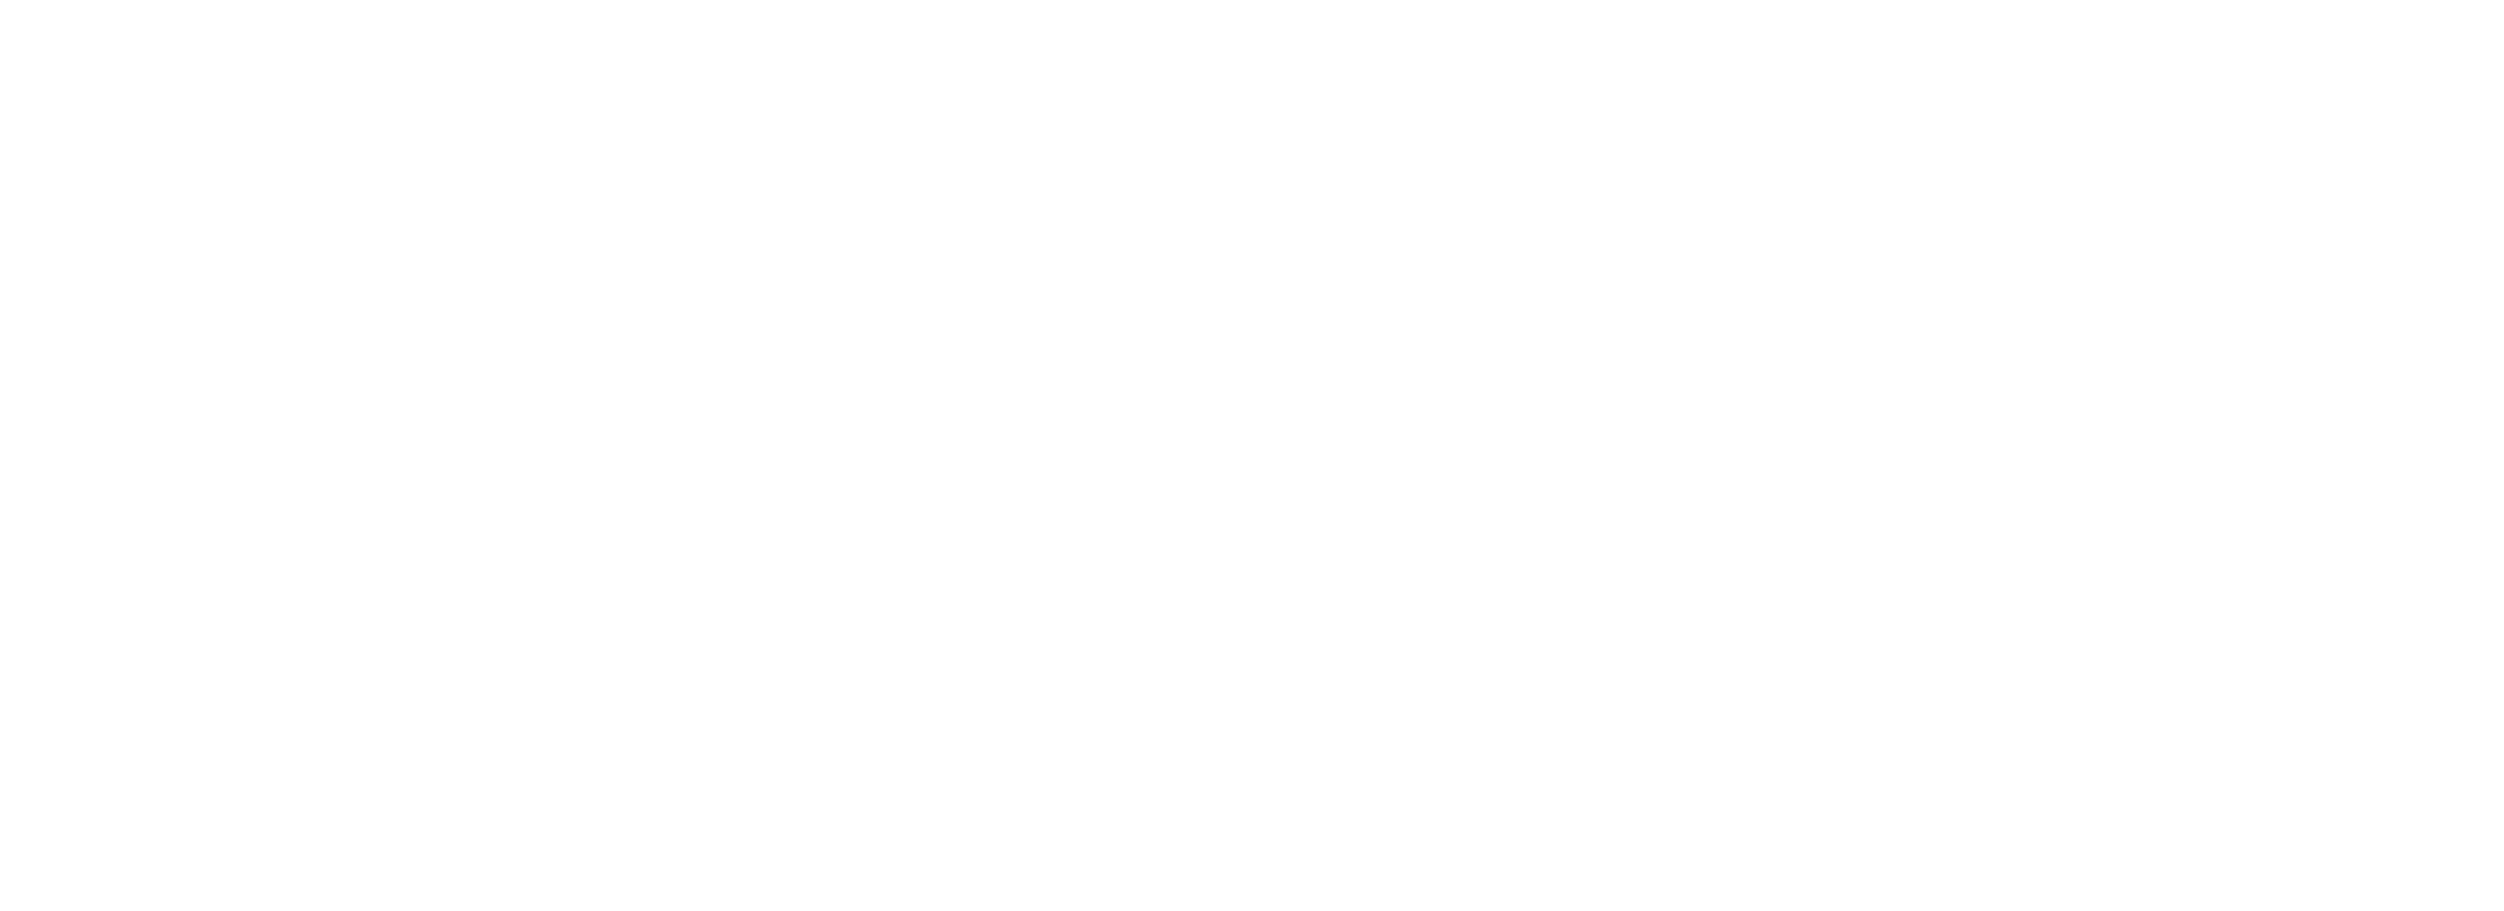 mantas_service_b2b-02